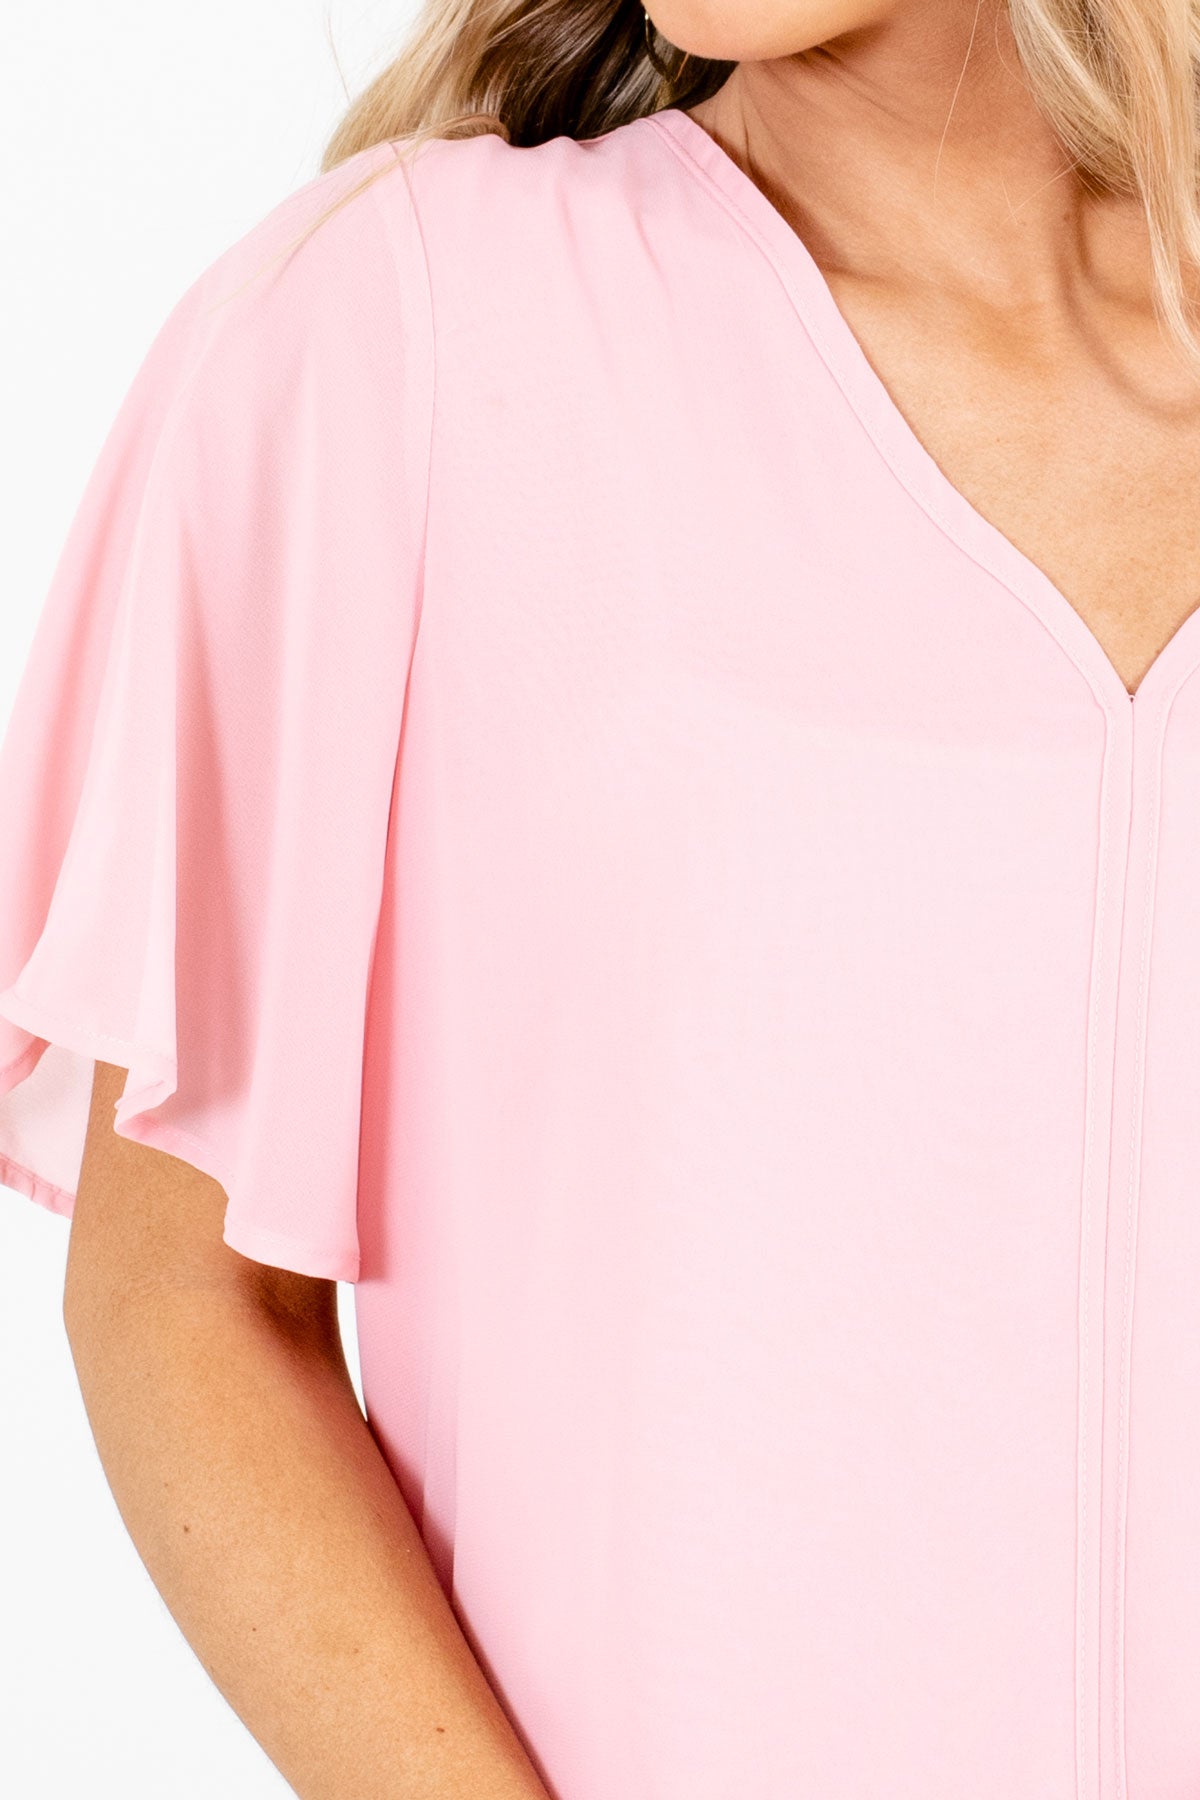 Women's Flutter Sleeve Pink Blouse with V Neck